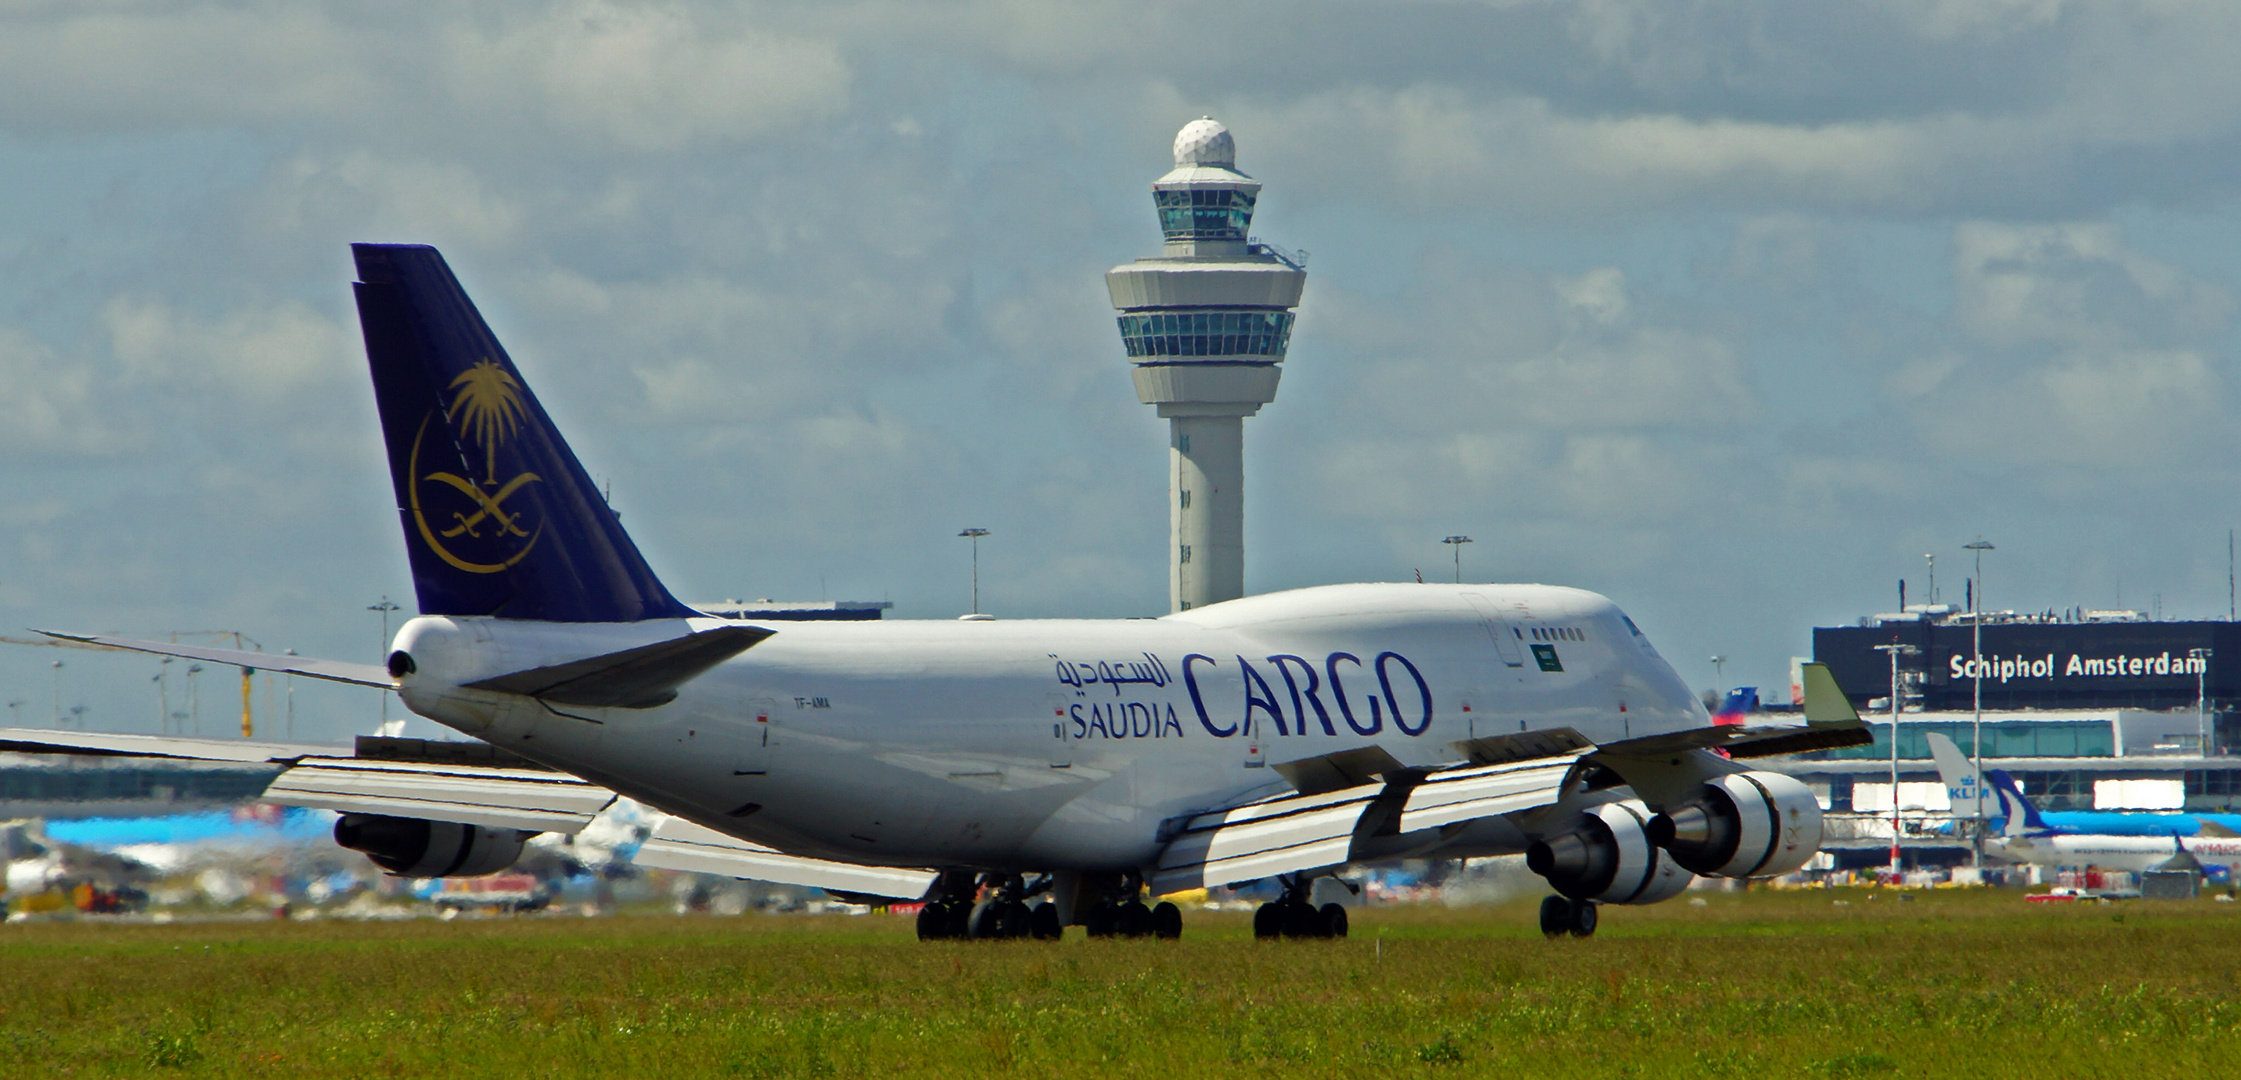 SAUDIA CARGO Operated by Air Atlanta Icelandic